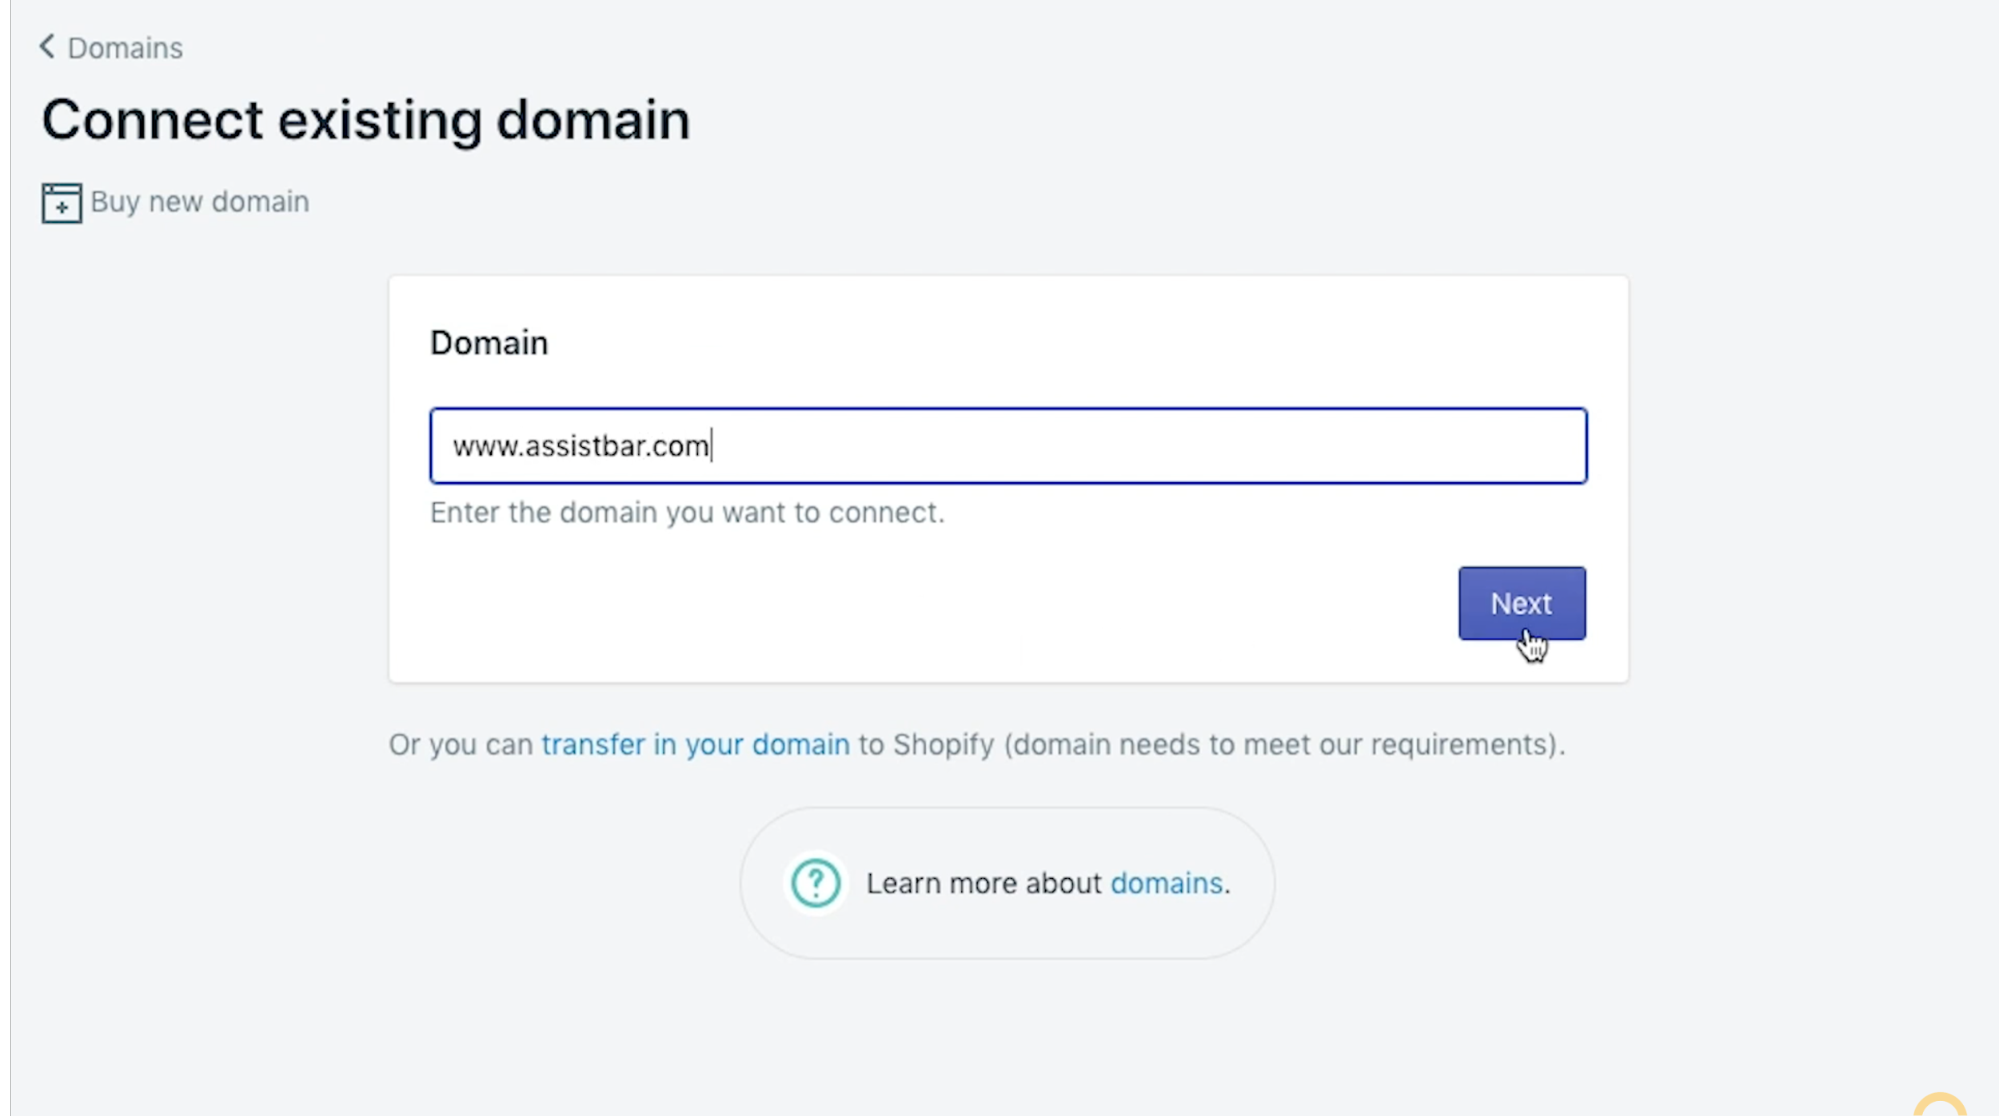 Input your domain name and click Next